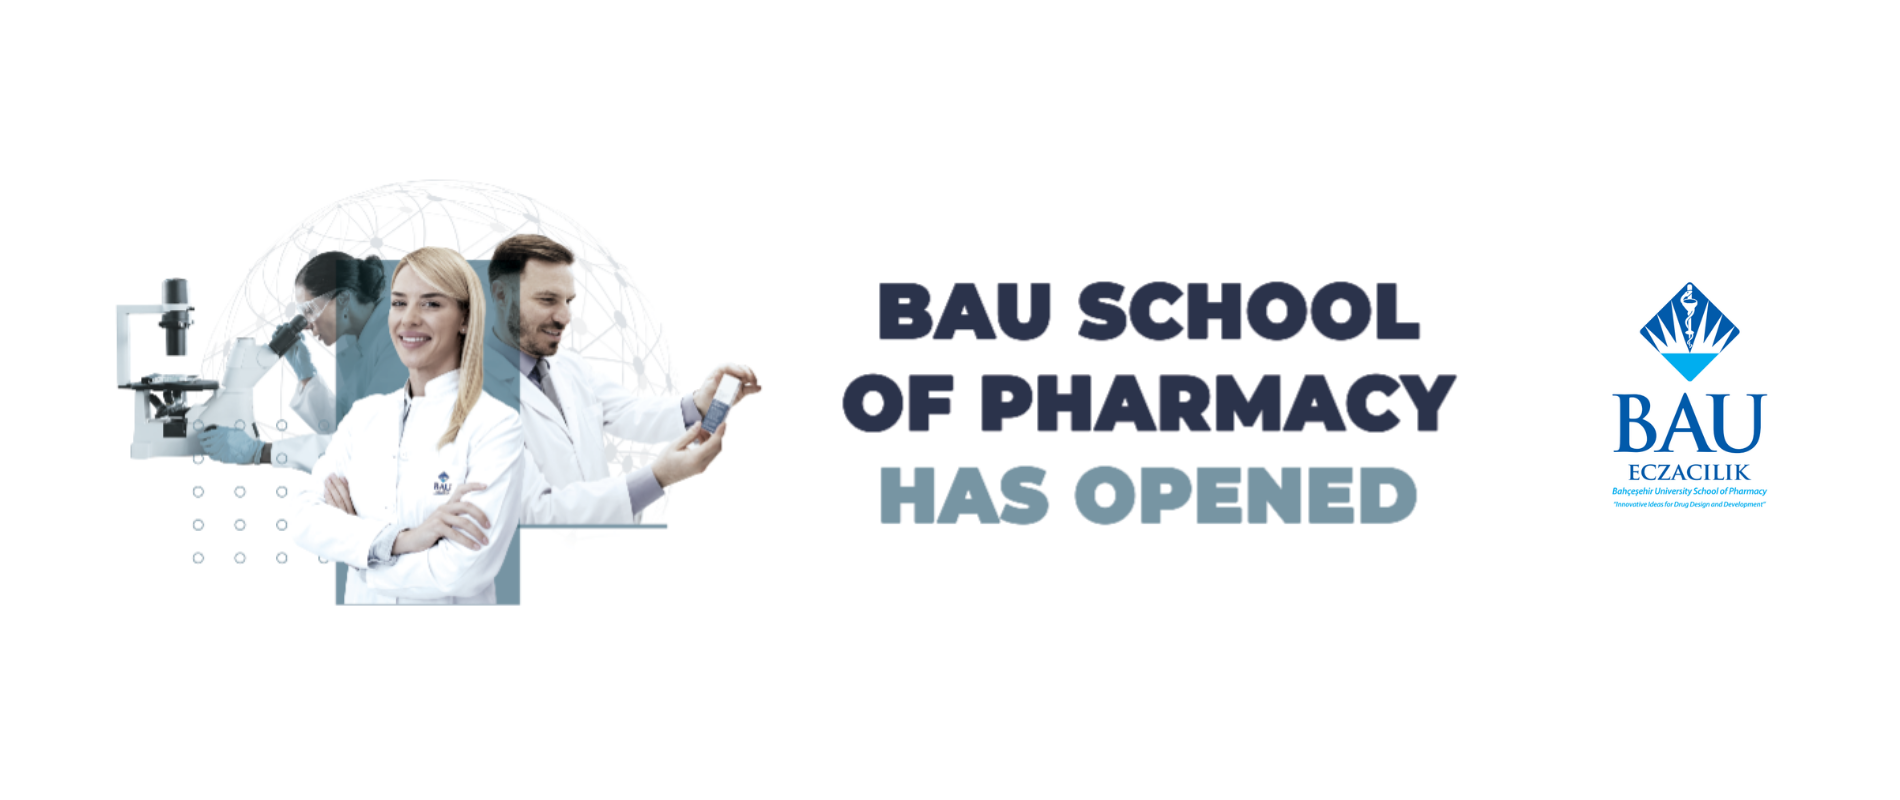 BAU School of Pharmacy Has Opened